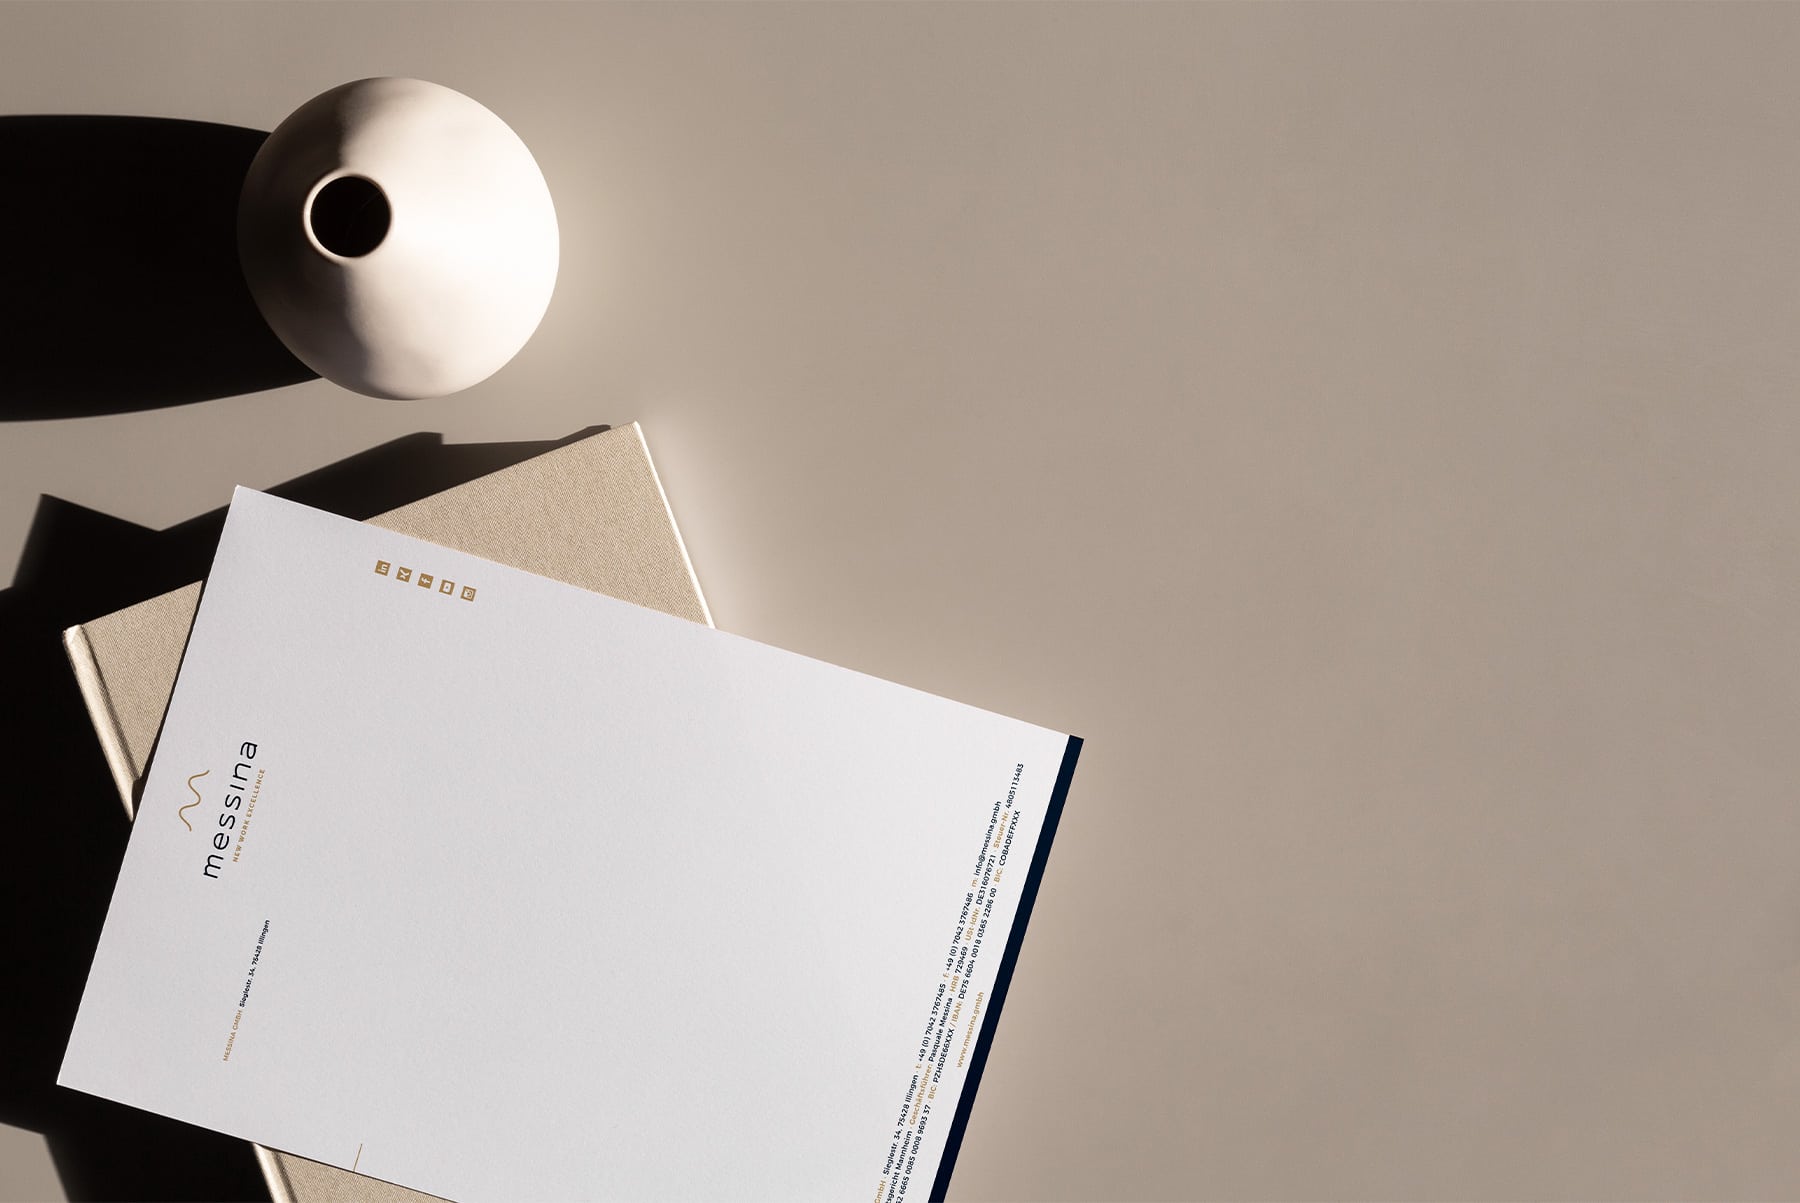 Design Printmaterial - Design Briefbogen - Corporate Design - Corporate Identity